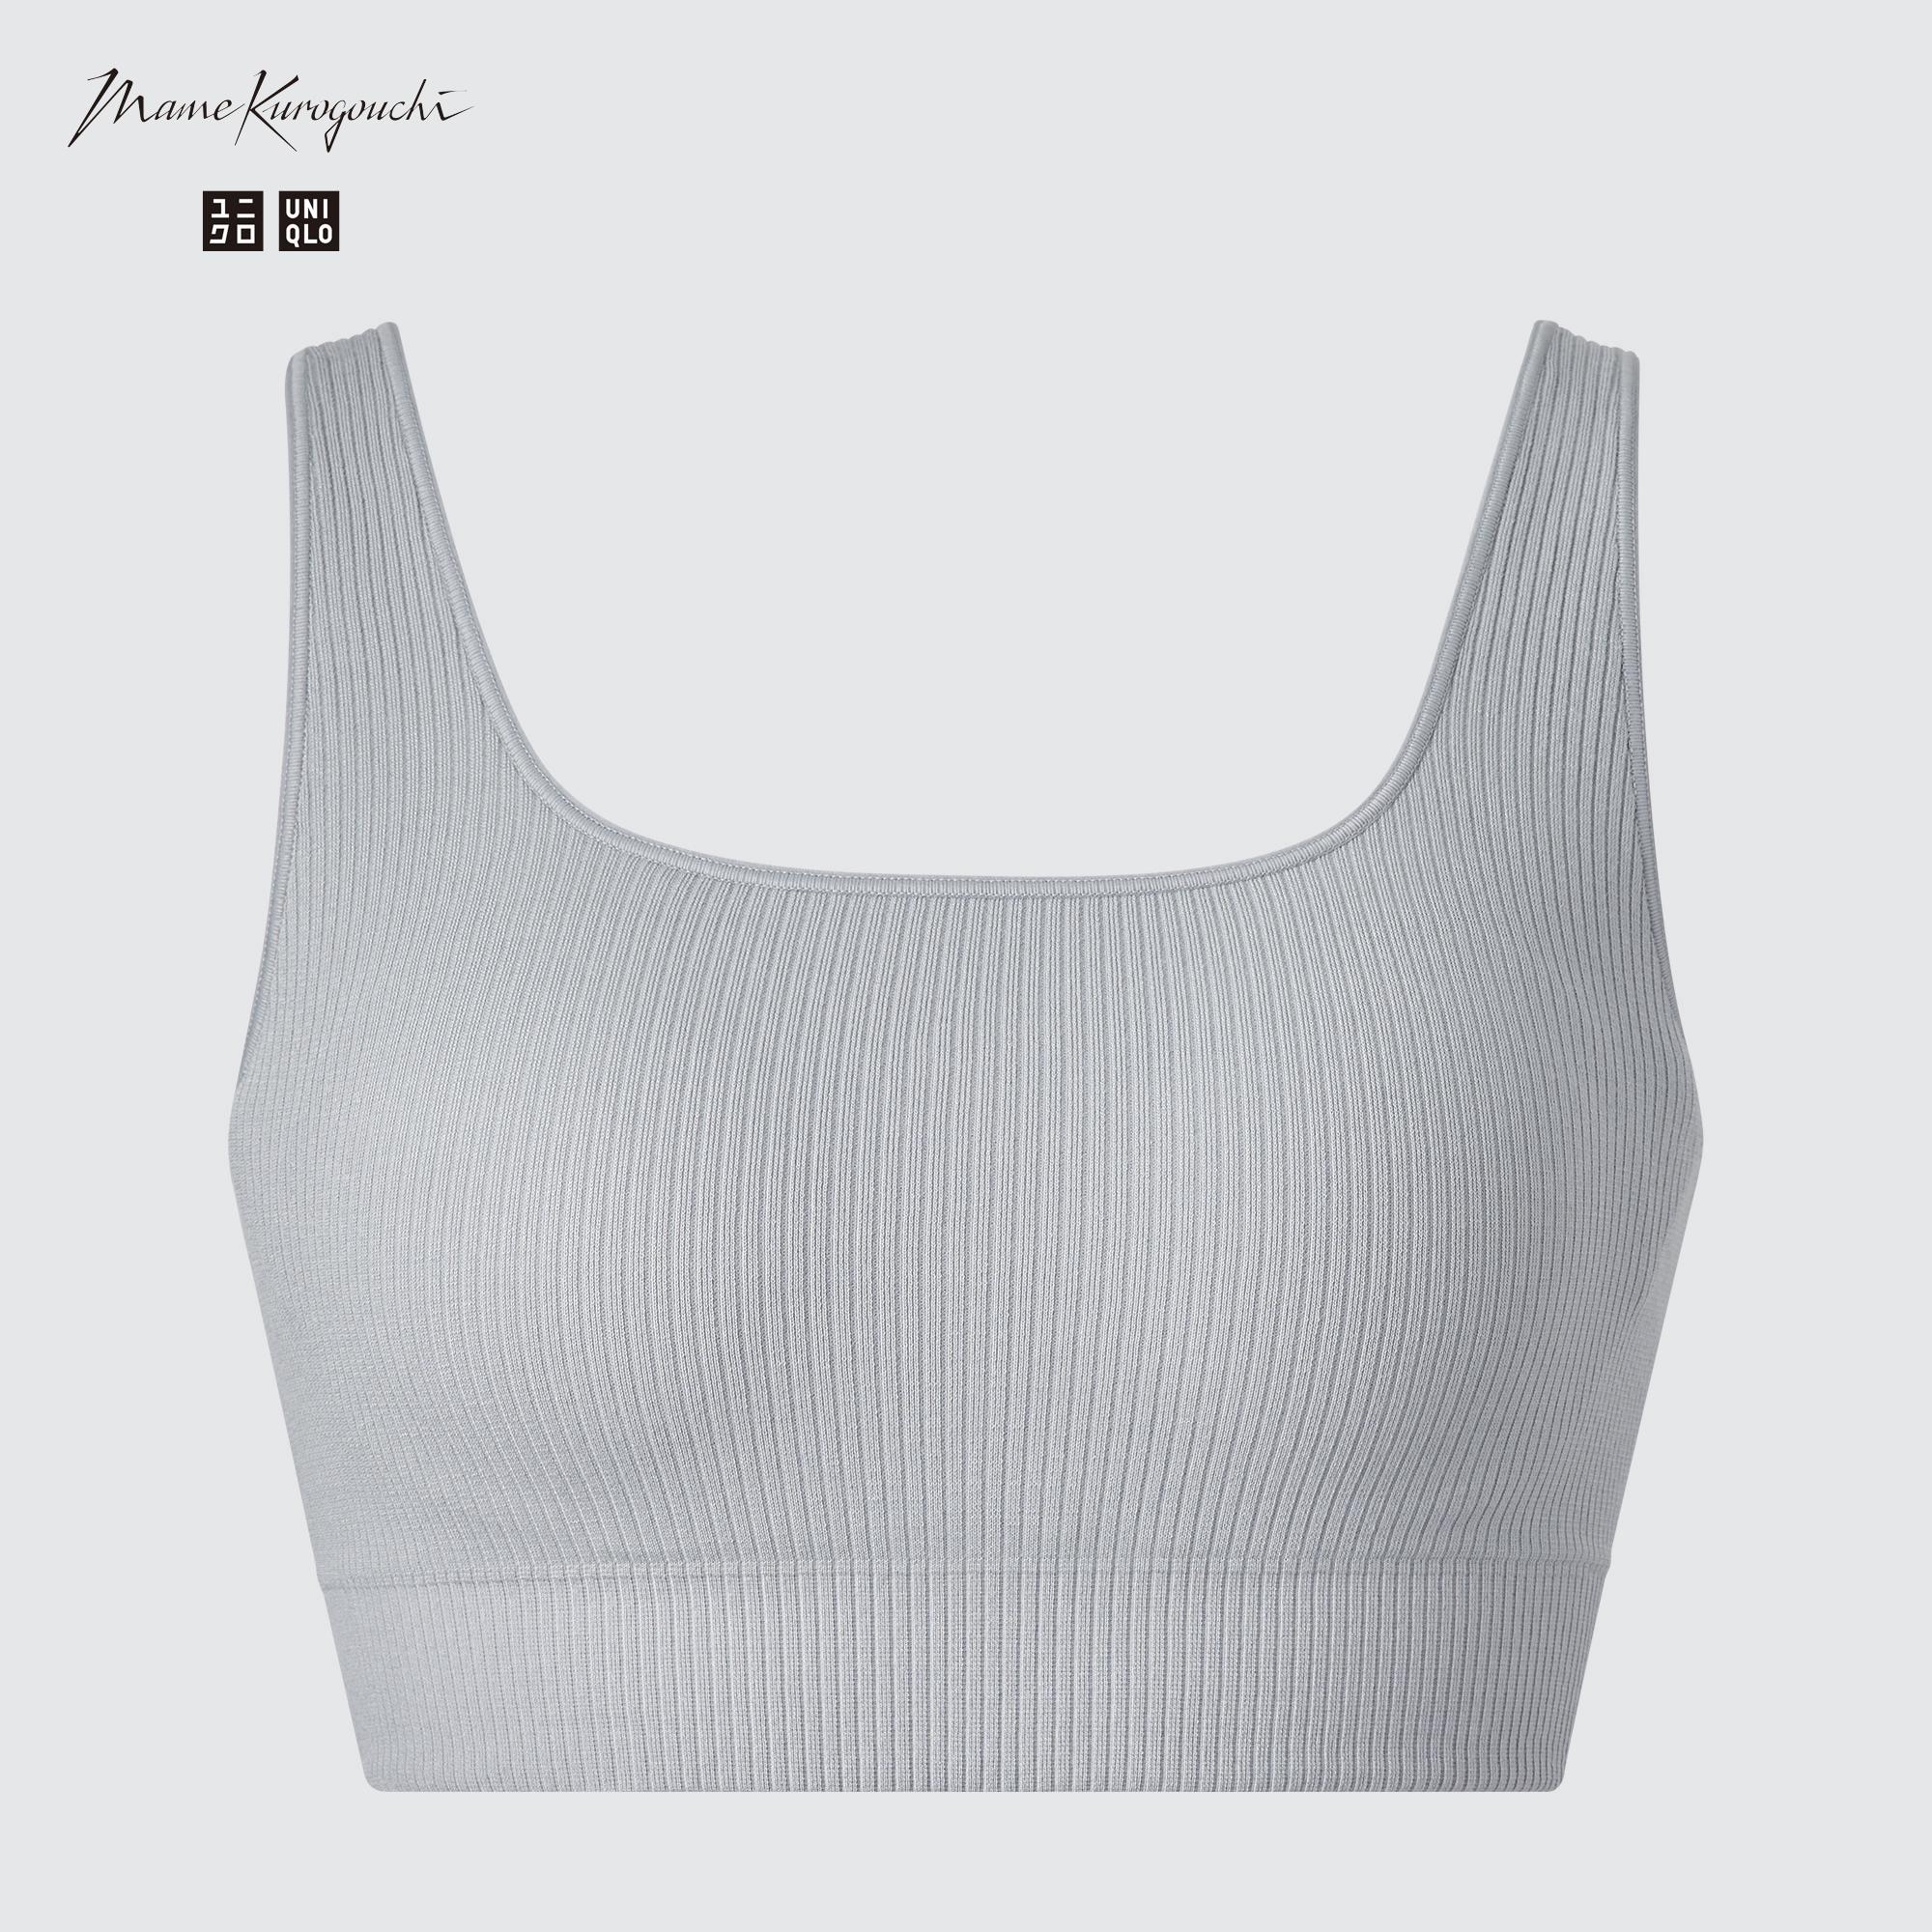 Uniqlo nude wireless T shirt bra size medium - $14 - From shana